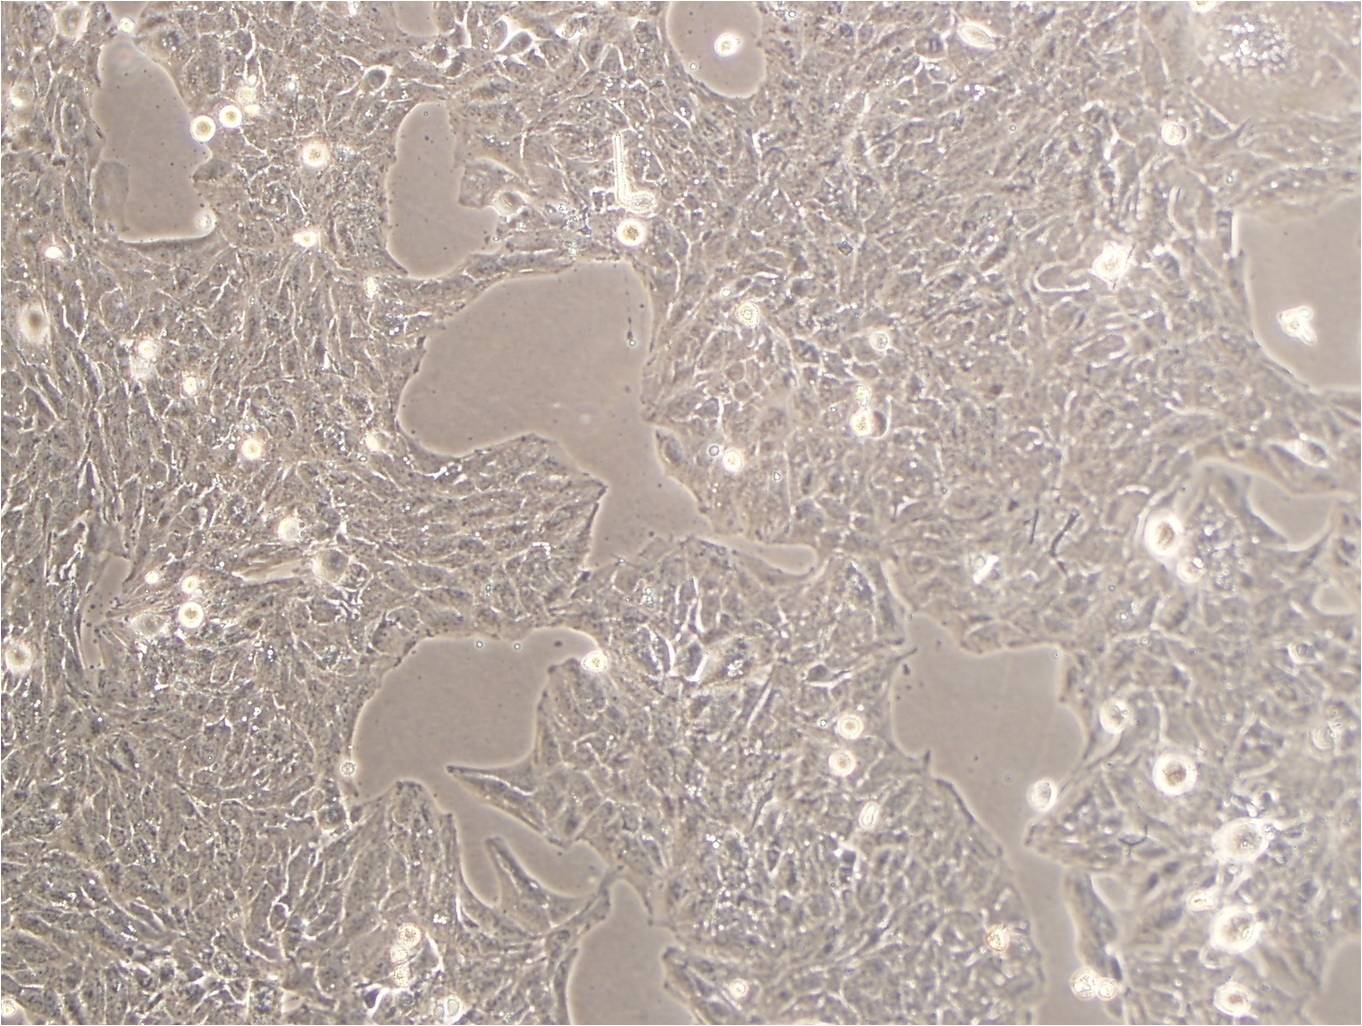 LMH cell line鸡肝癌细胞系